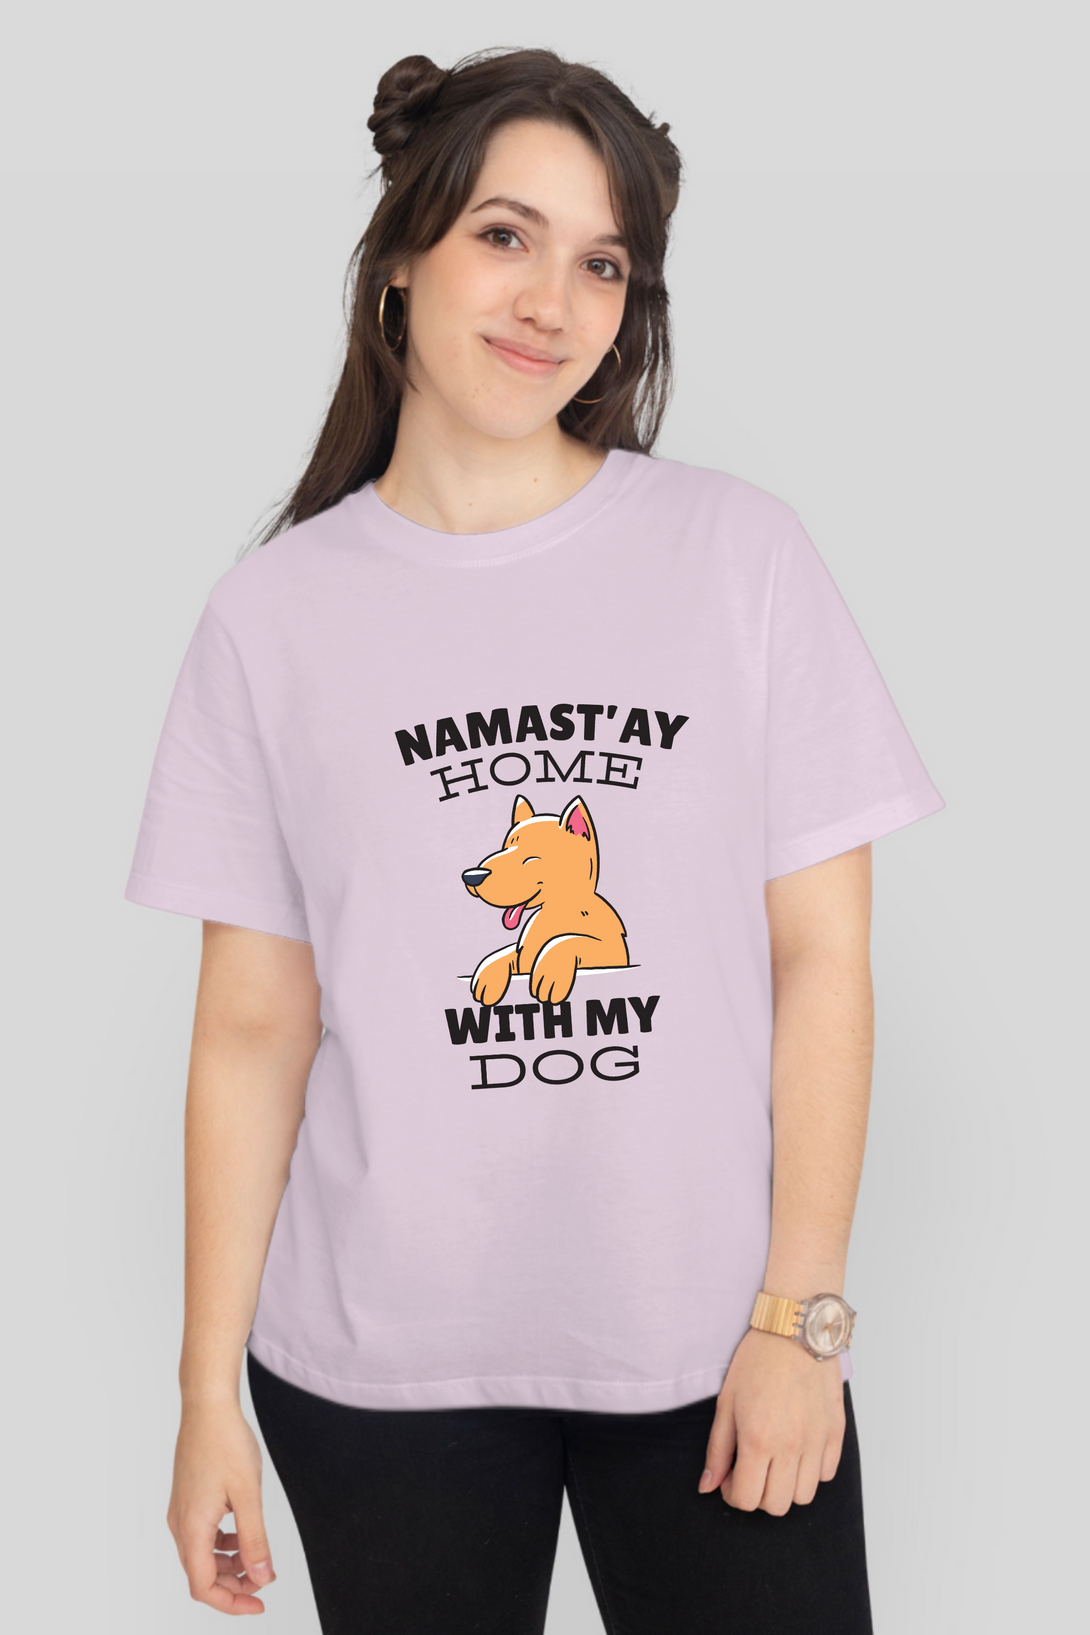 Namastay Home Dog Printed T-Shirt For Women - WowWaves - 9